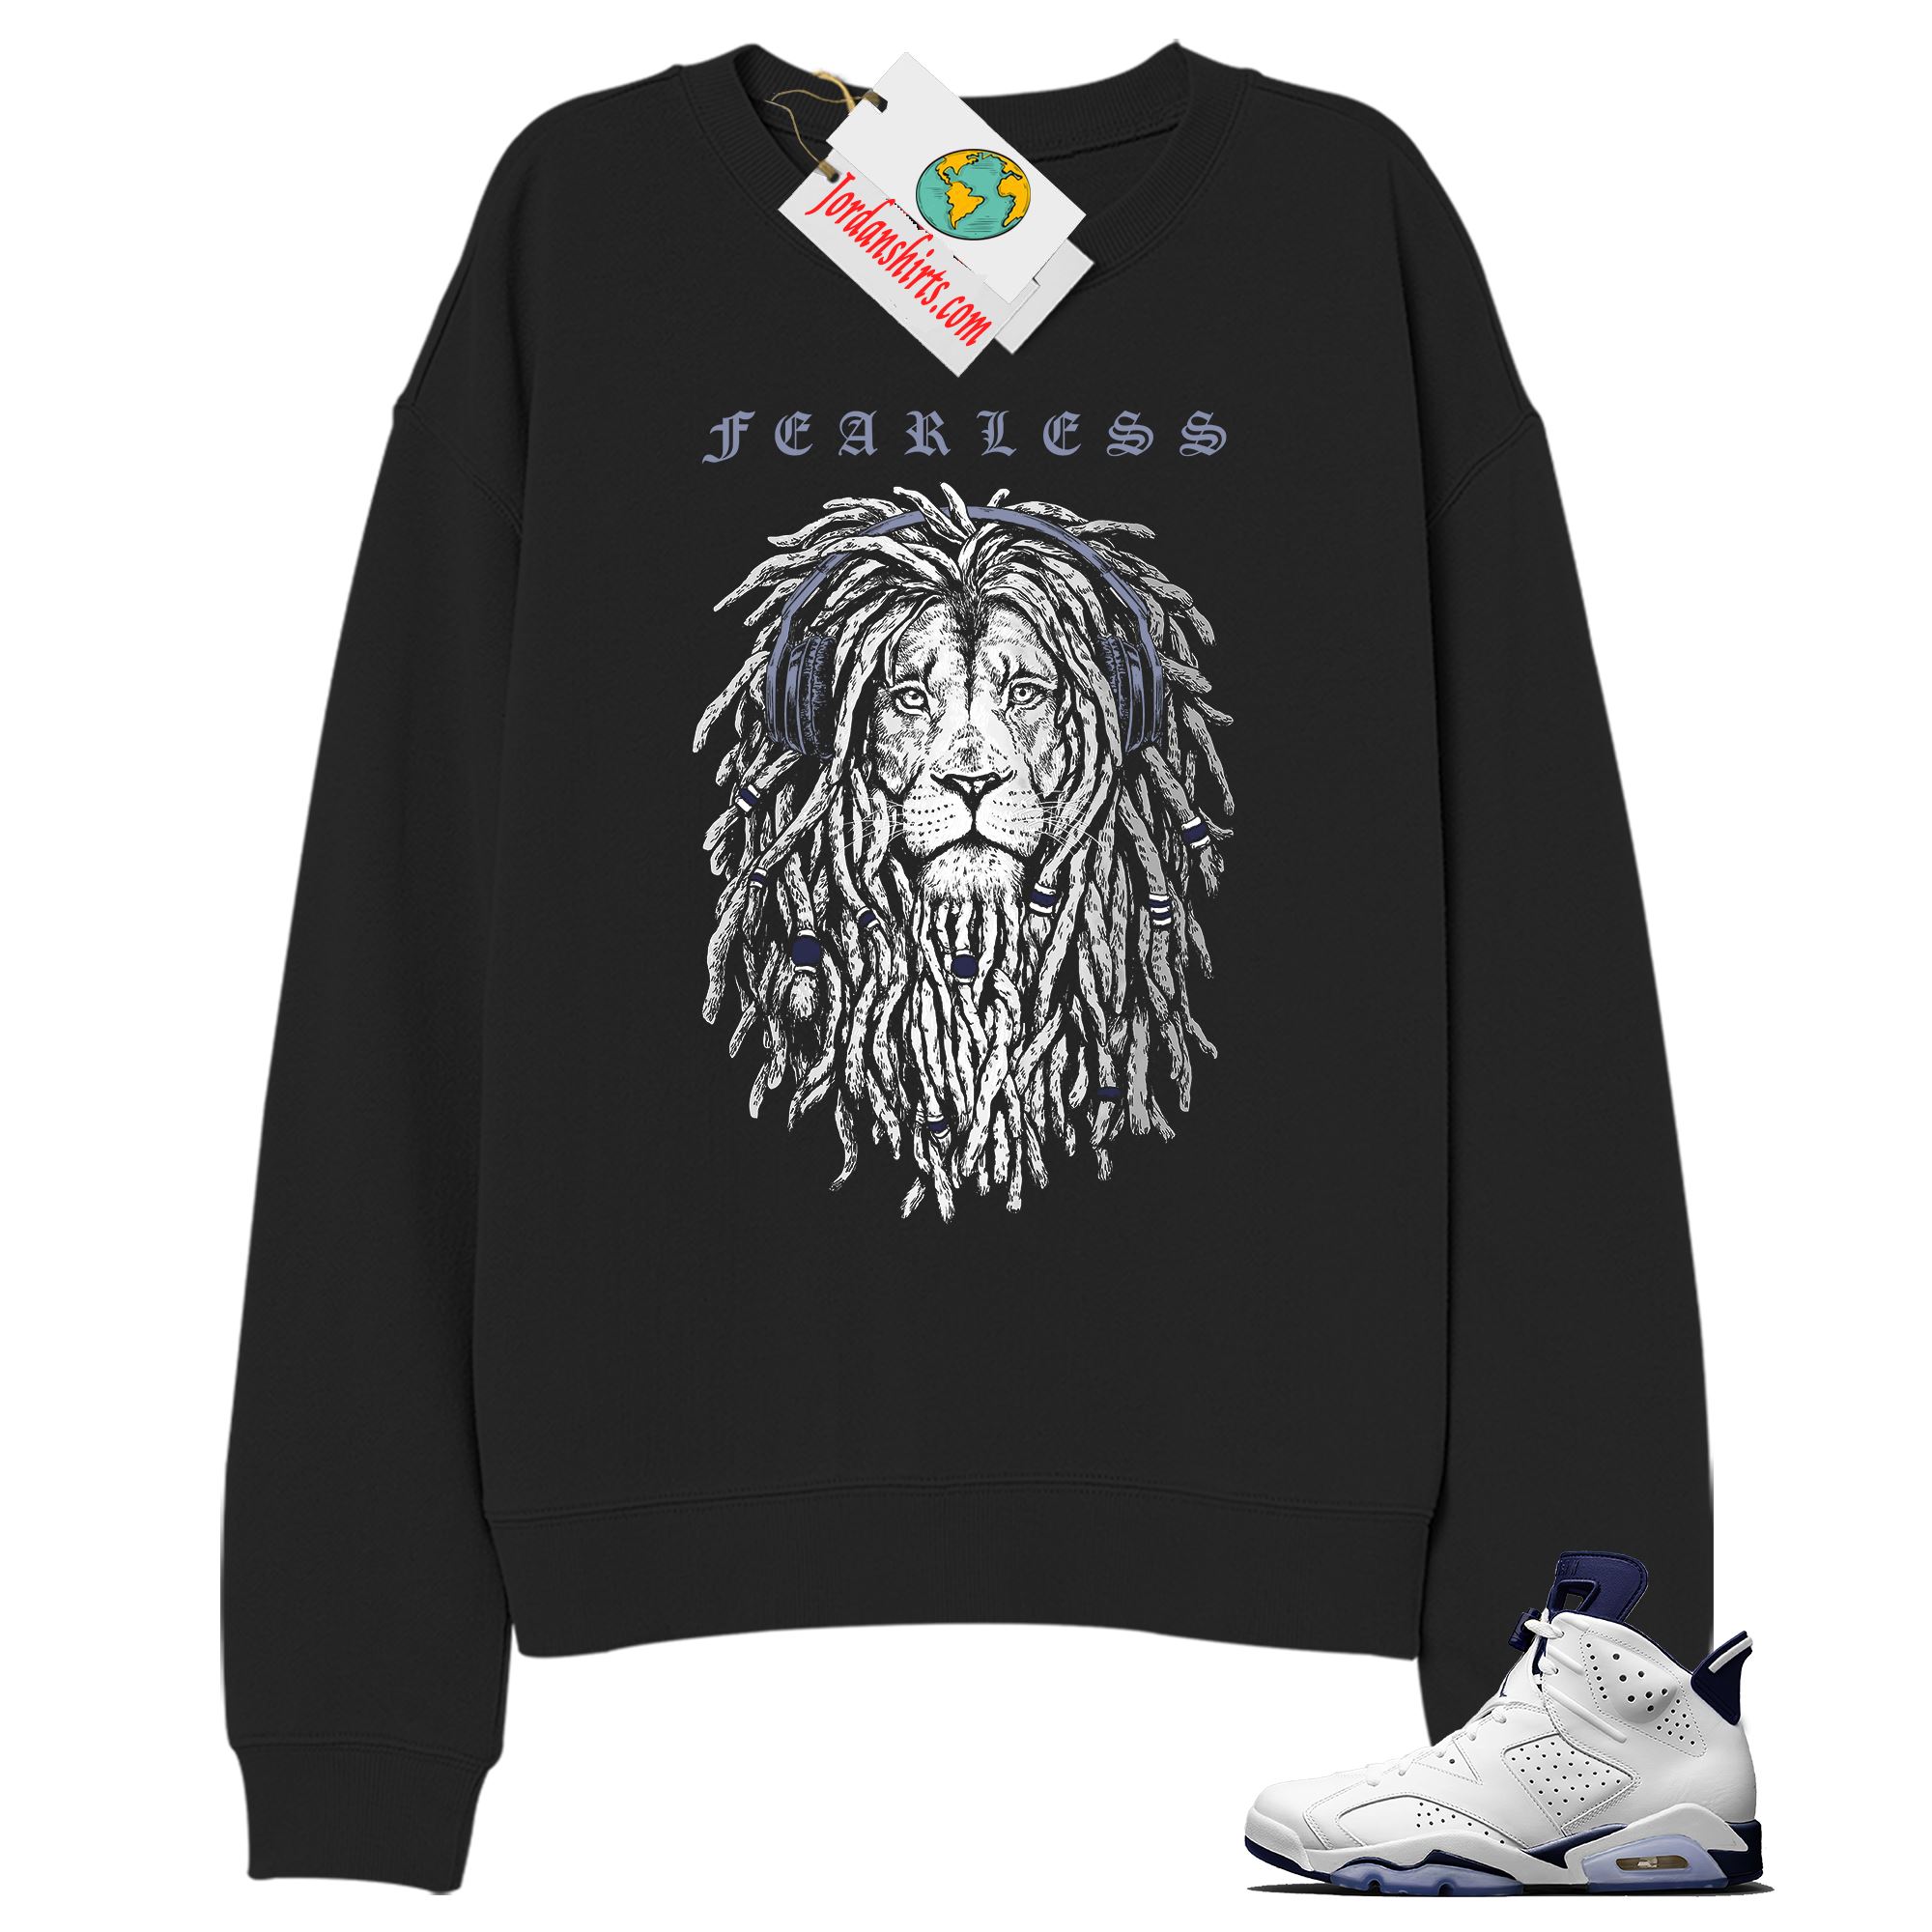 Jordan 6 Sweatshirt, Fearless Lion Black Sweatshirt Air Jordan 6 Midnight Navy 6s Full Size Up To 5xl